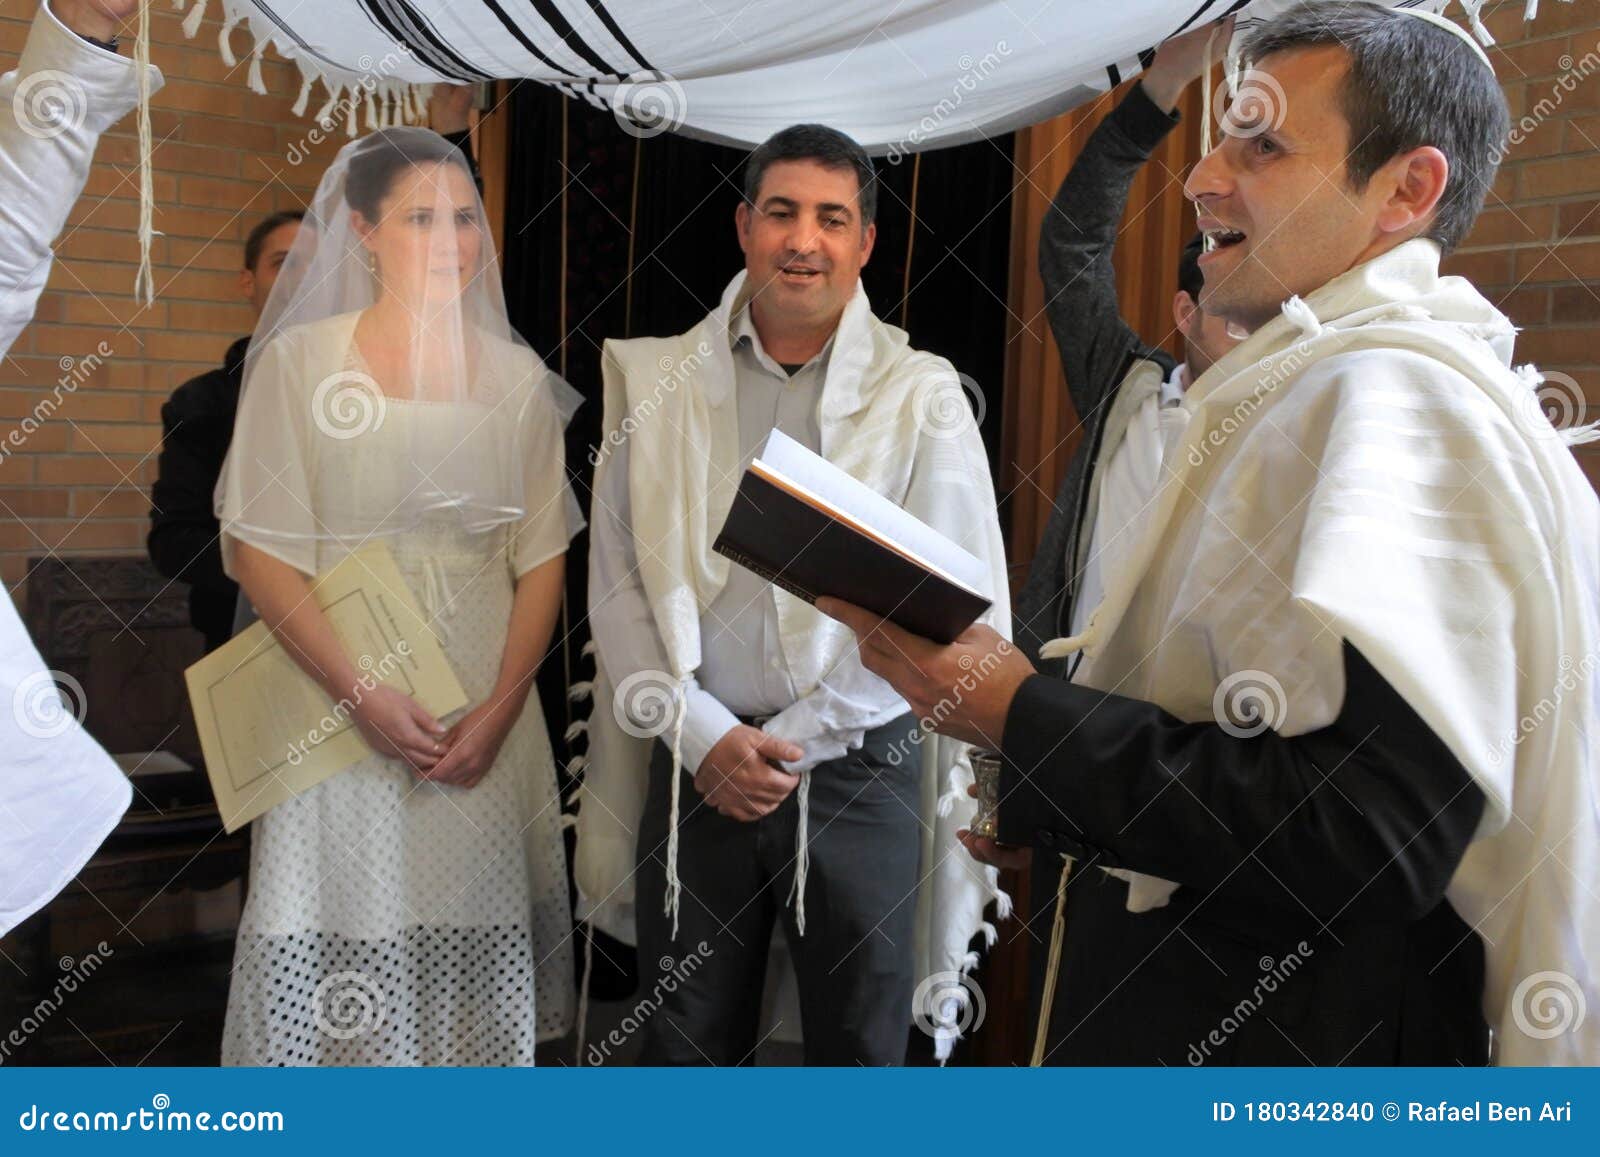 Rabbi Blessing Jewish Bride And A Bridegroom In Jewish